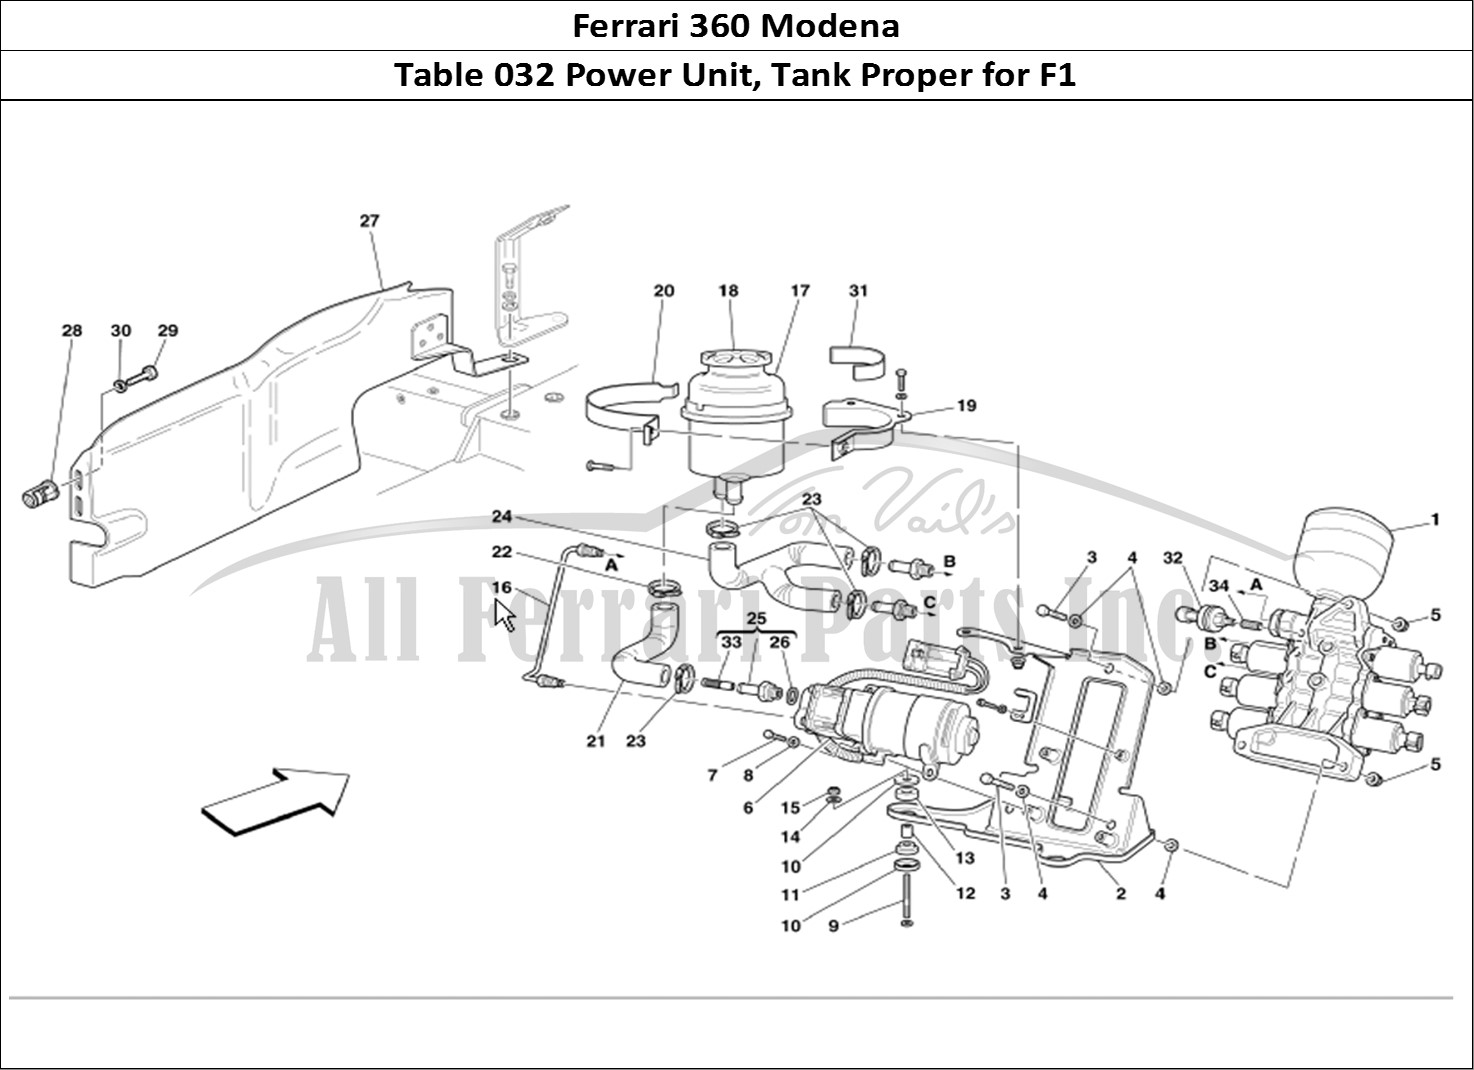 Ferrari Parts Ferrari 360 Modena Page 032 Power Unit and Tank -Vali